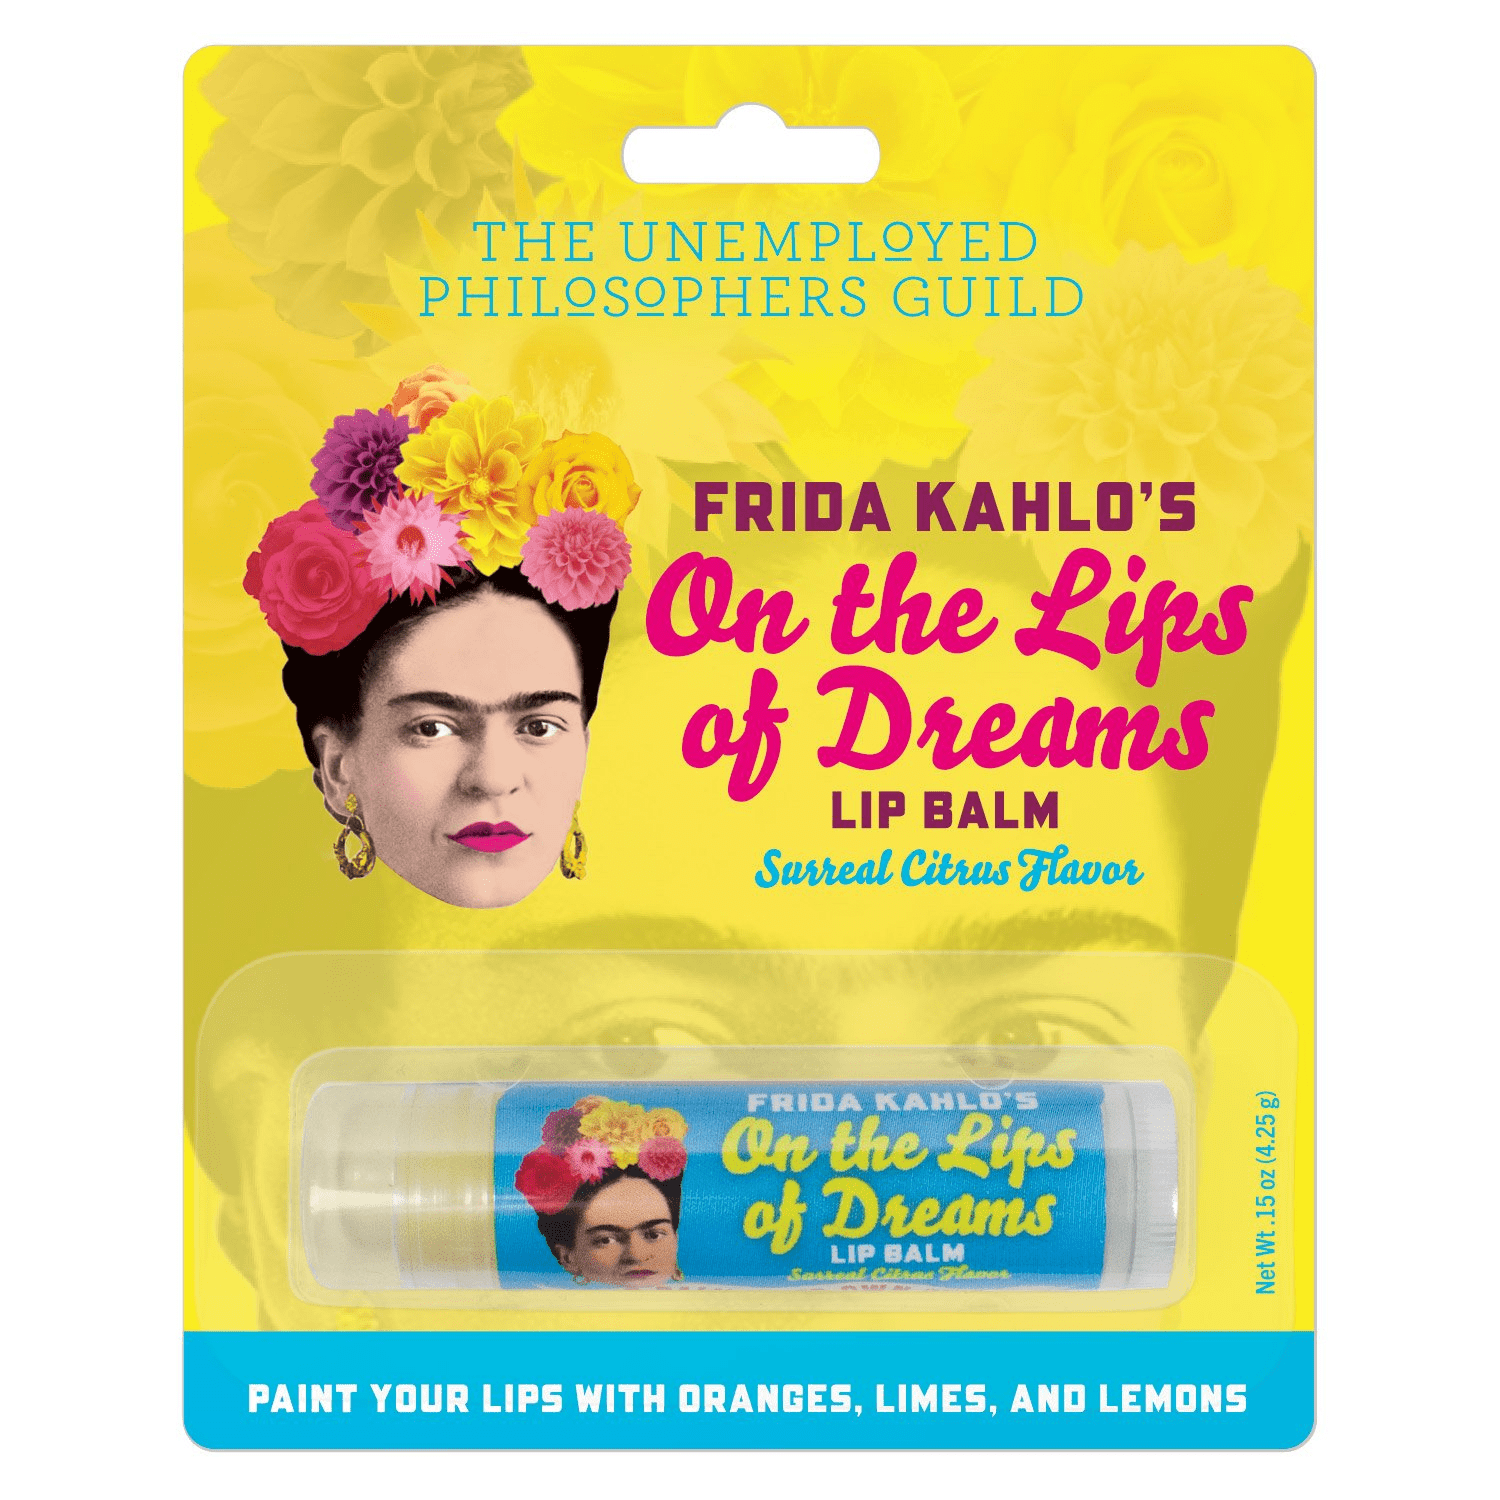 Frida's Lip Balm Unemployed Philosophers Guild Clothing/Accessories